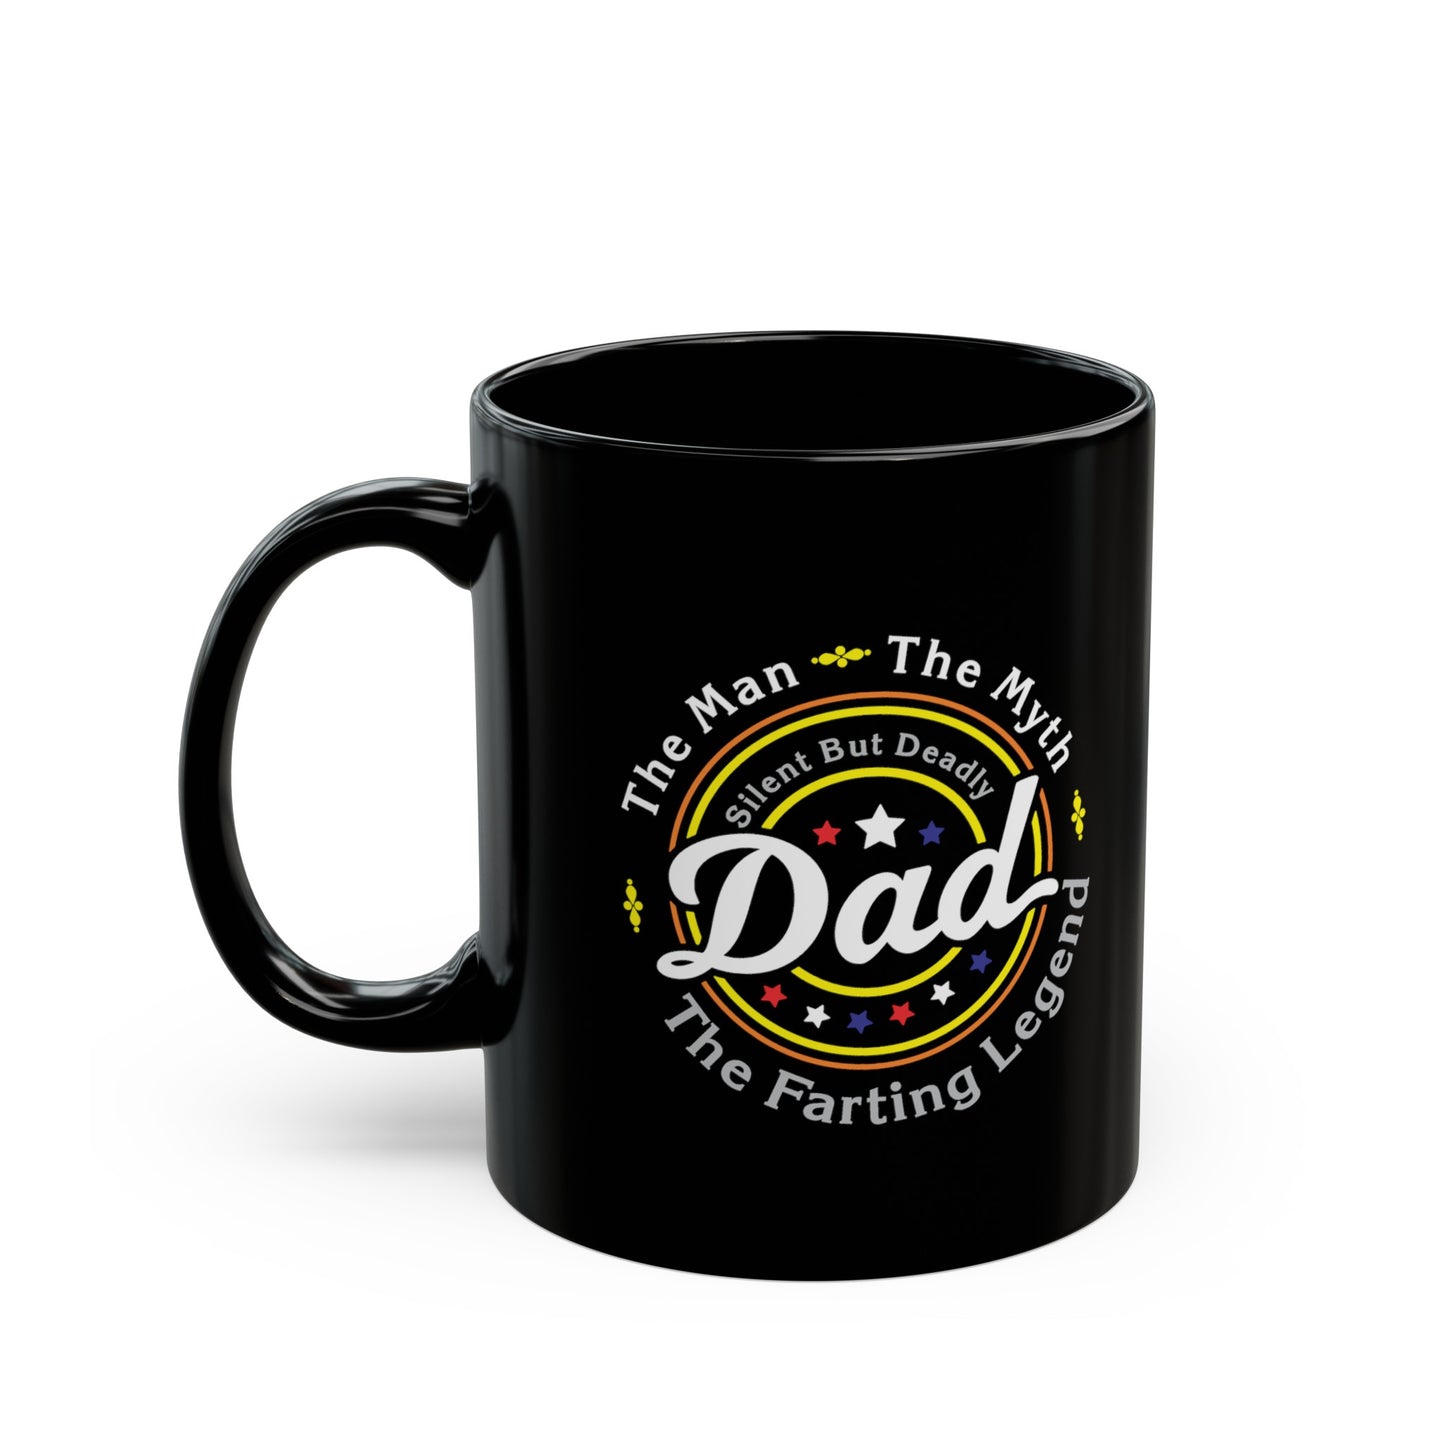 DAD The Farting Legend - Black Mug (11oz, 15oz)